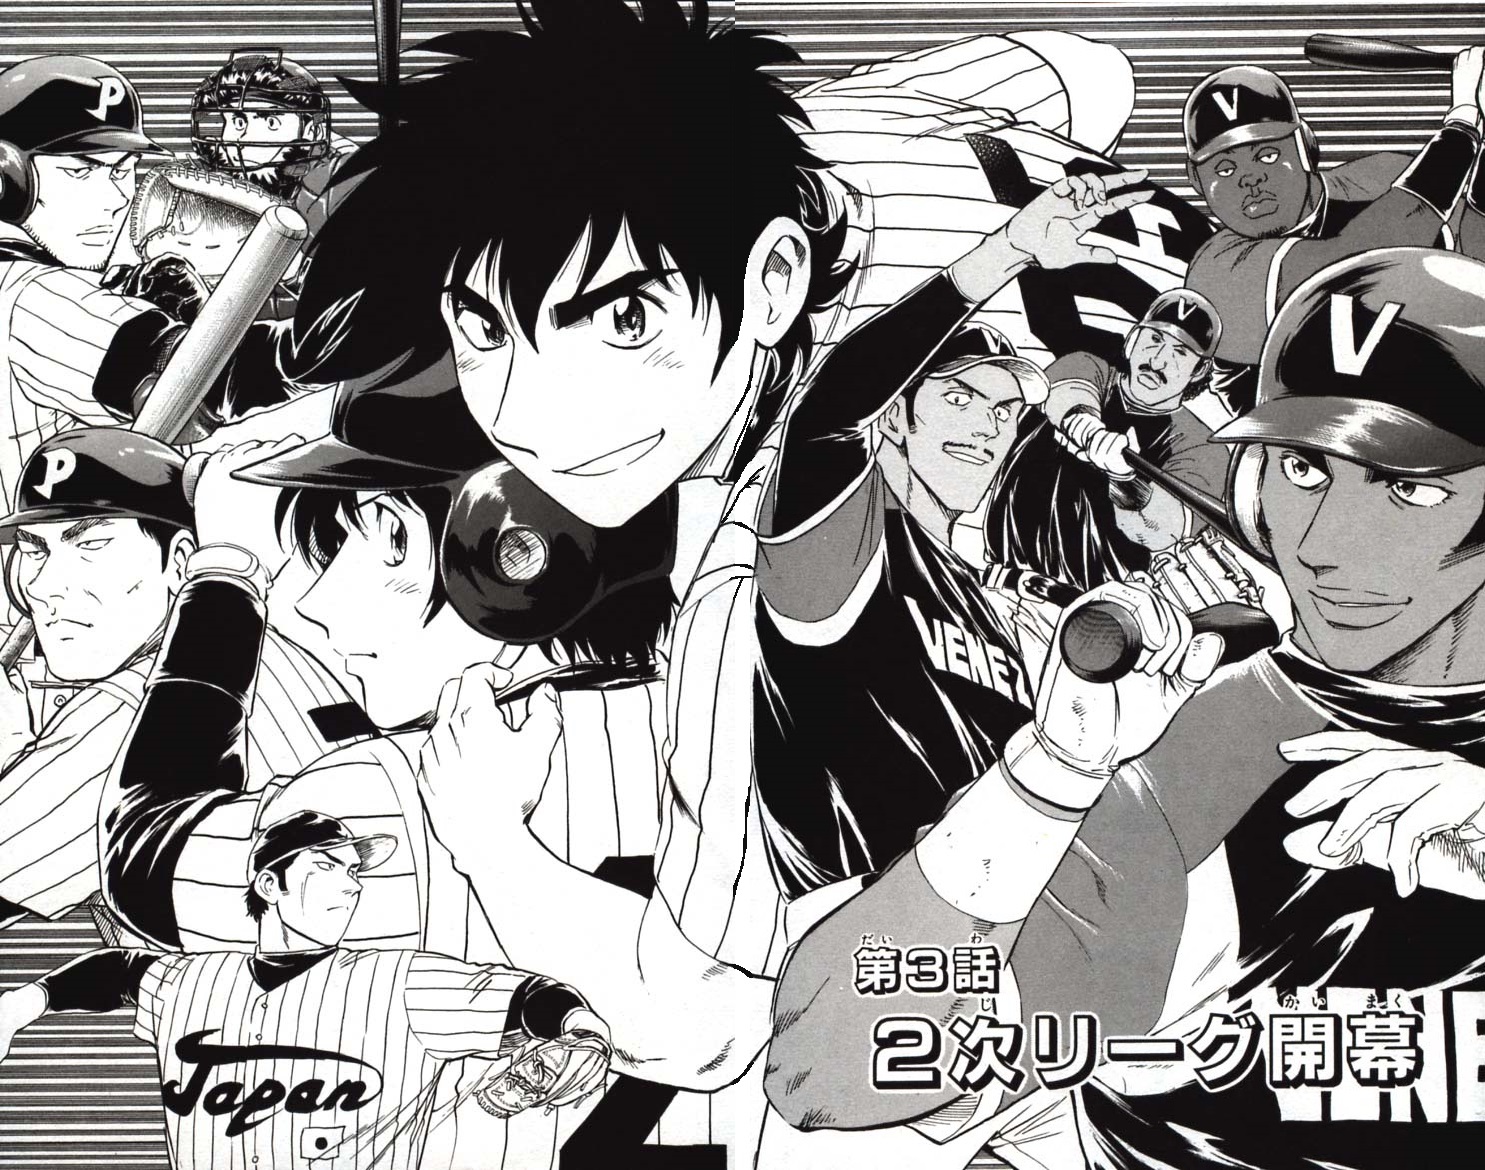 MAJOR Anime: Goro Shigeno's saga is still one of the best sports, anime  major - thirstymag.com